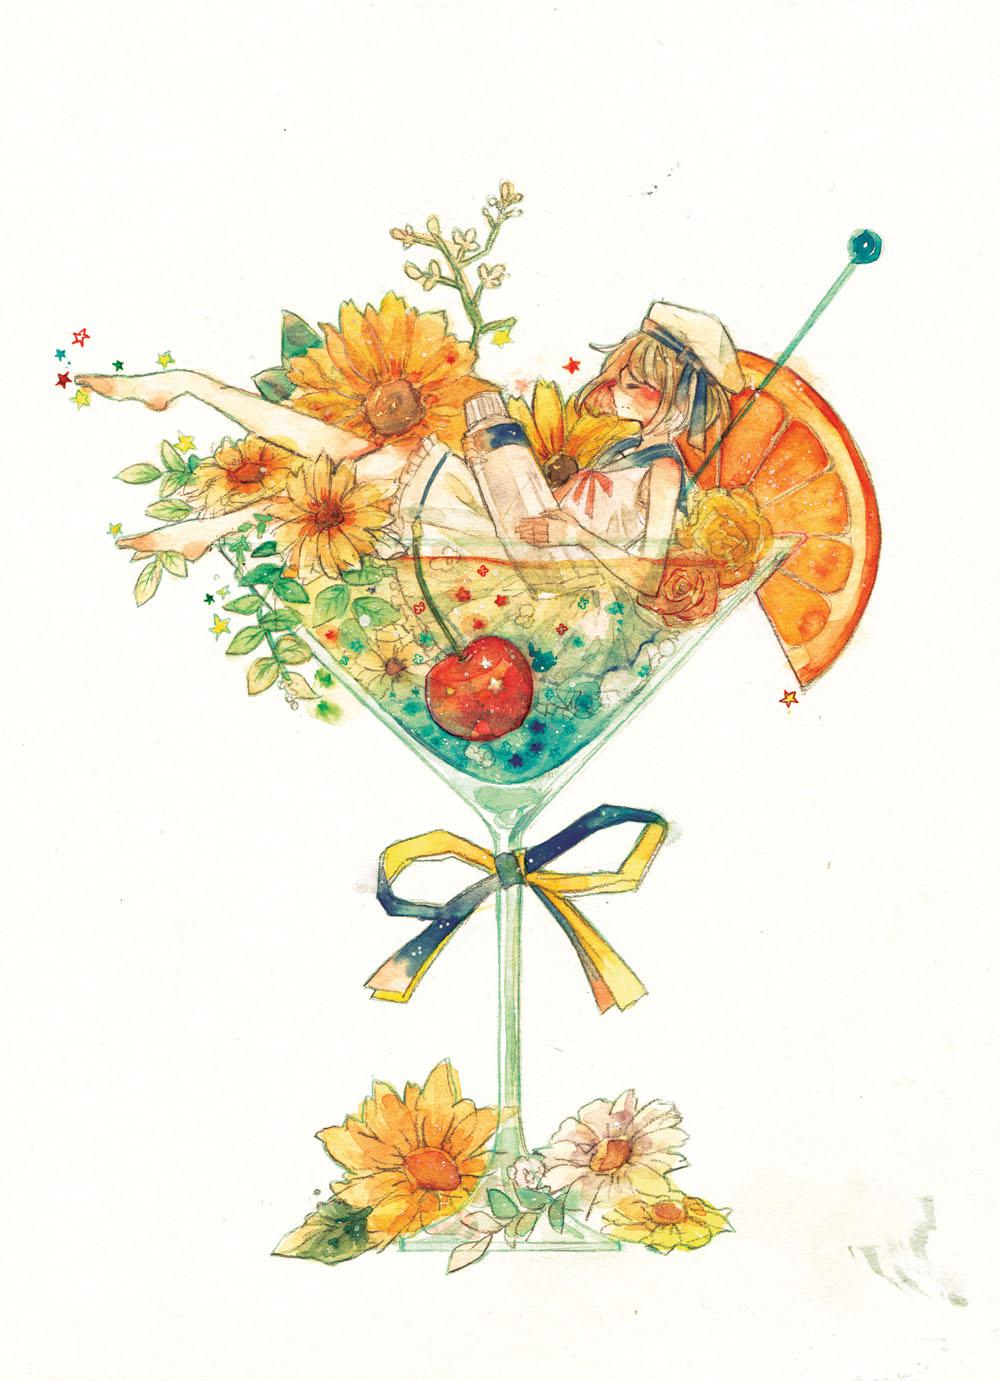 Summer Cocktail